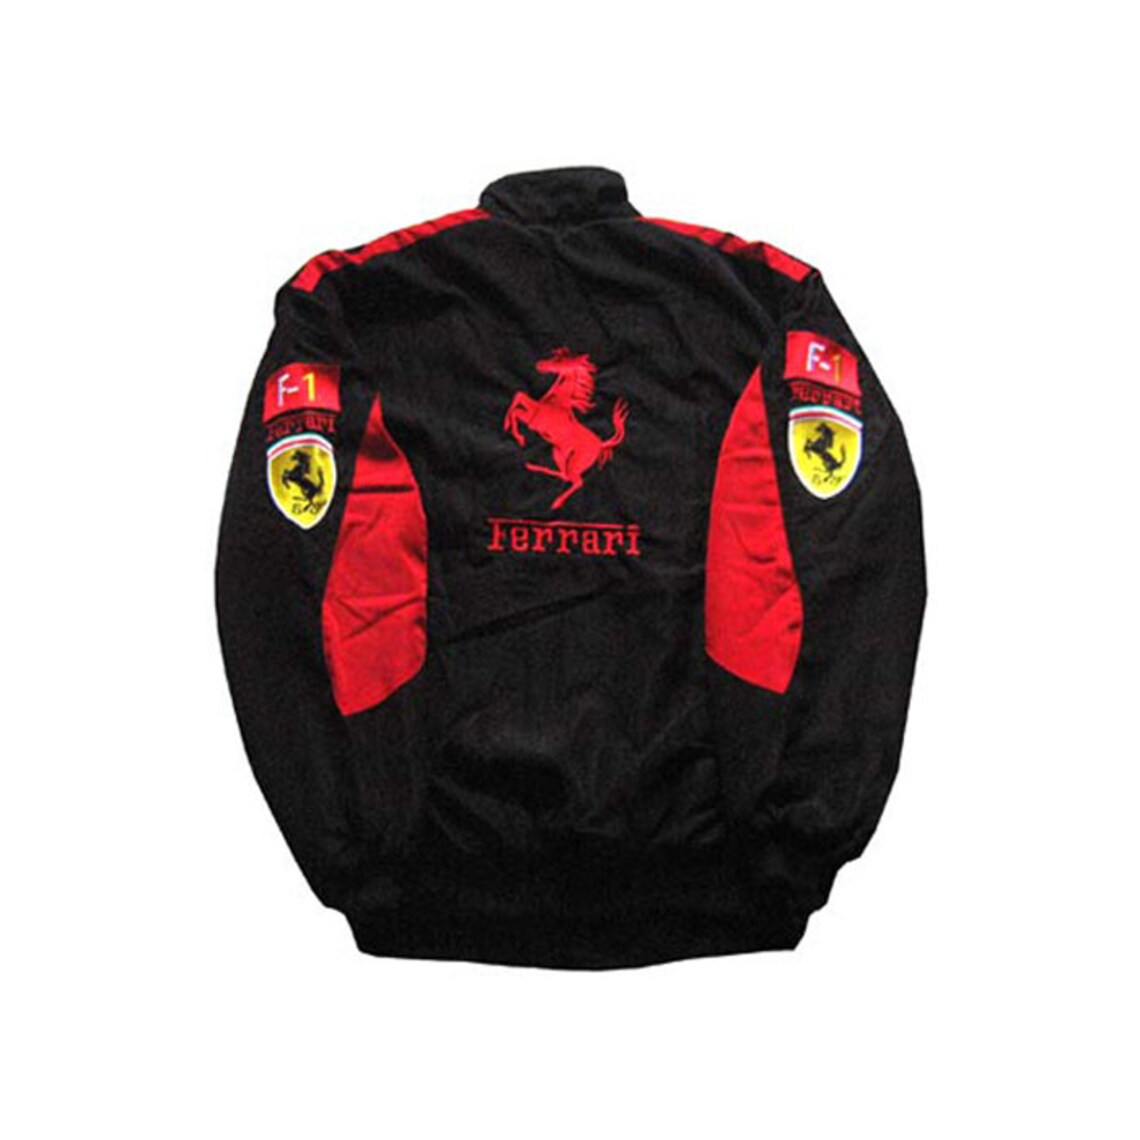 Ferrari F1 Racing Jacket Black With Red NASCAR Jacket - Etsy